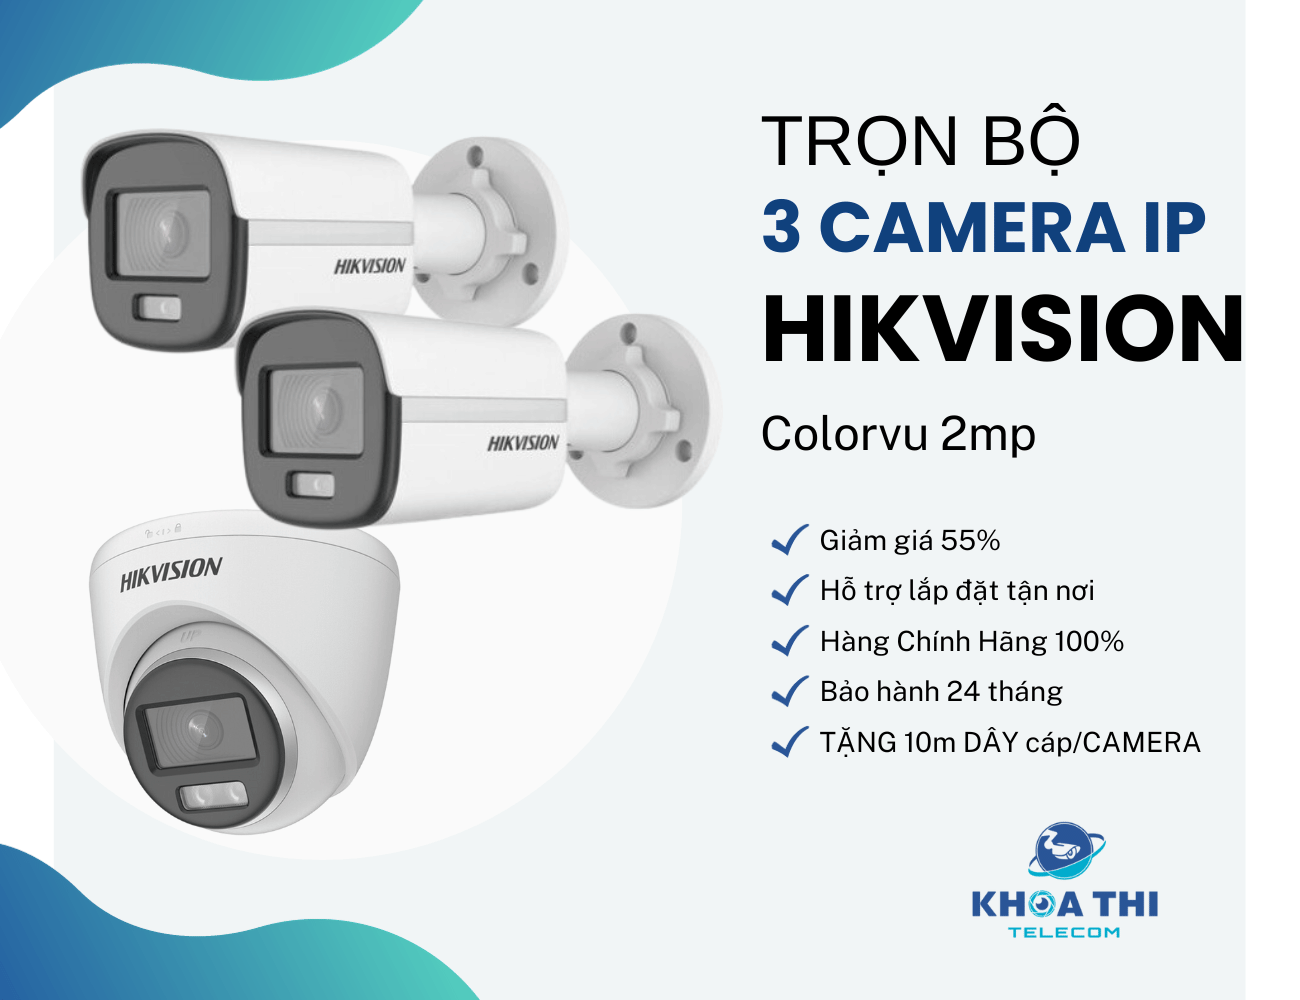 trọn bộ 3 camera ip hikvision colorvu 2mp